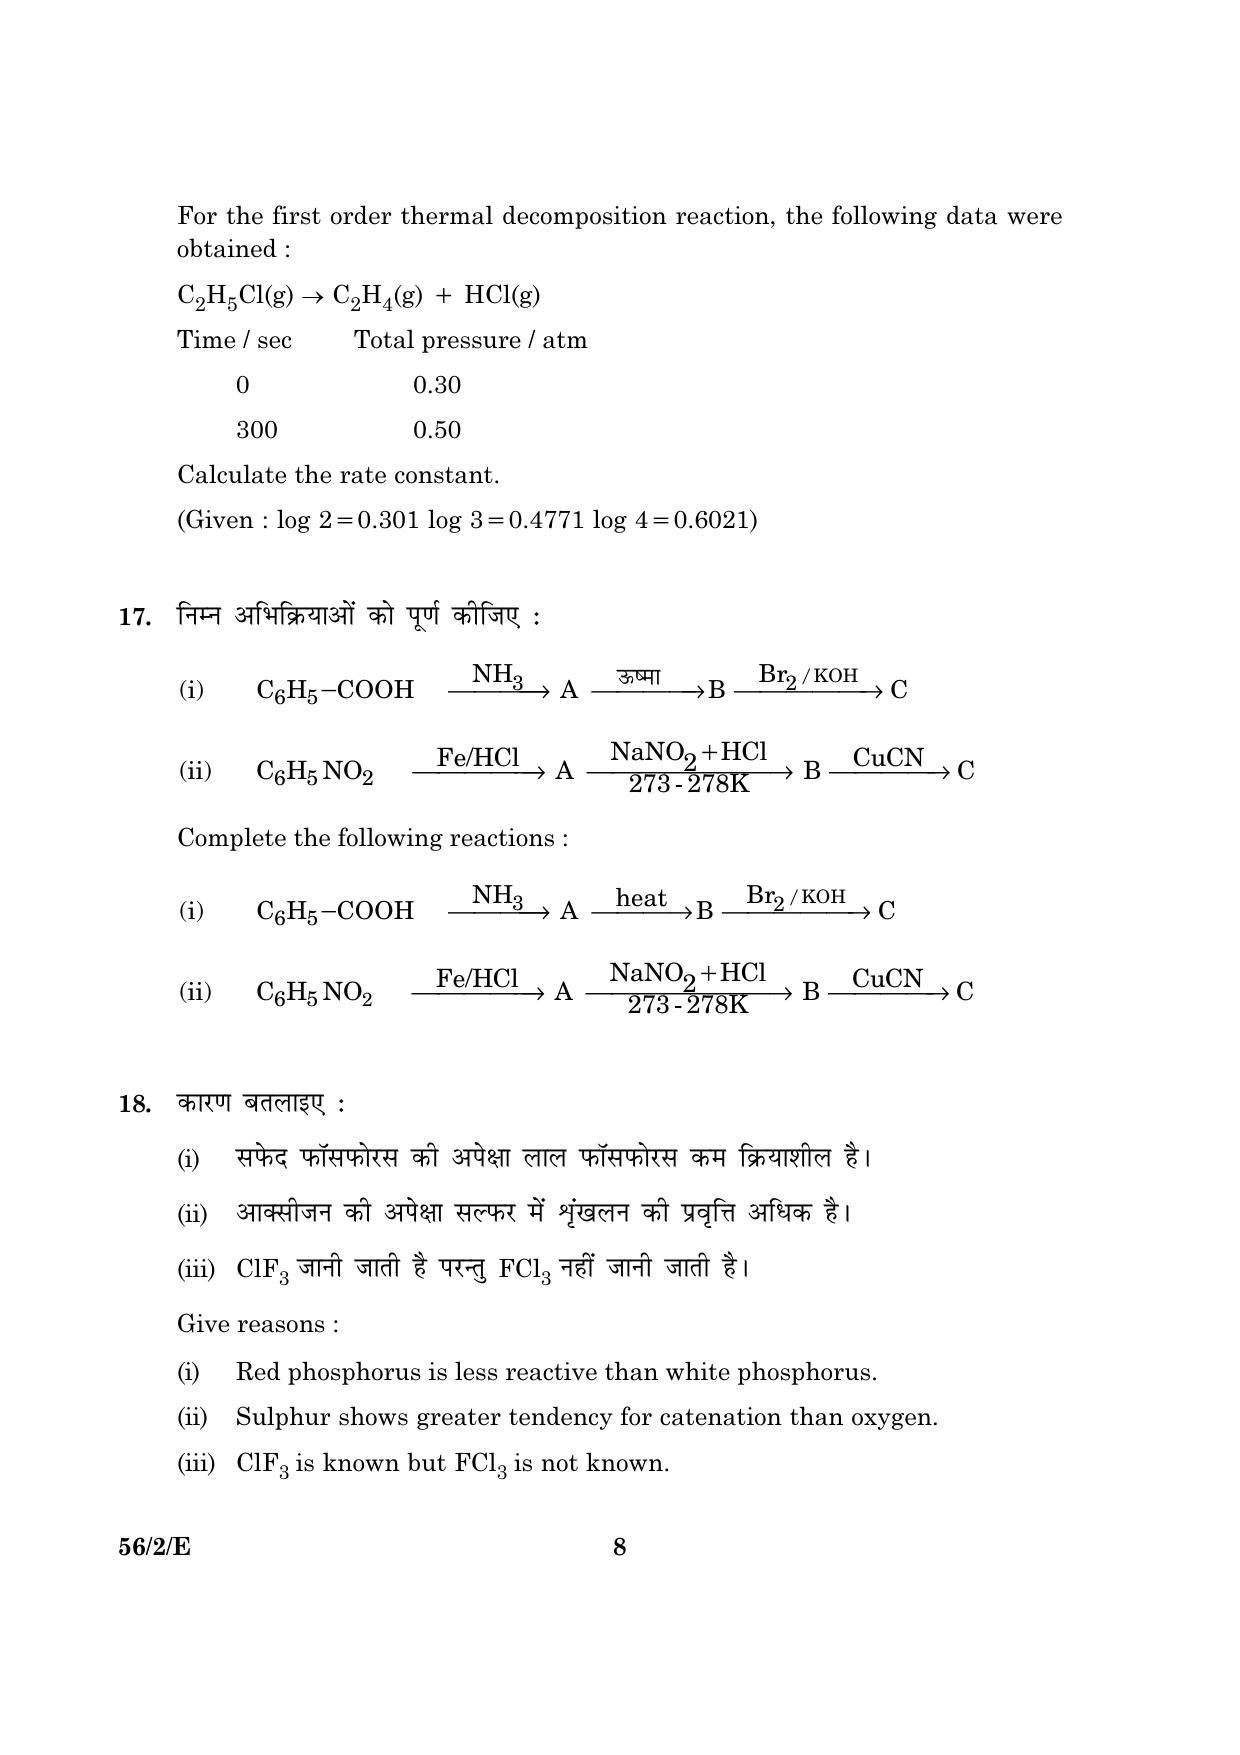 CBSE Class 12 056 Set 2 E Chemistry 2016 Question Paper - Page 8